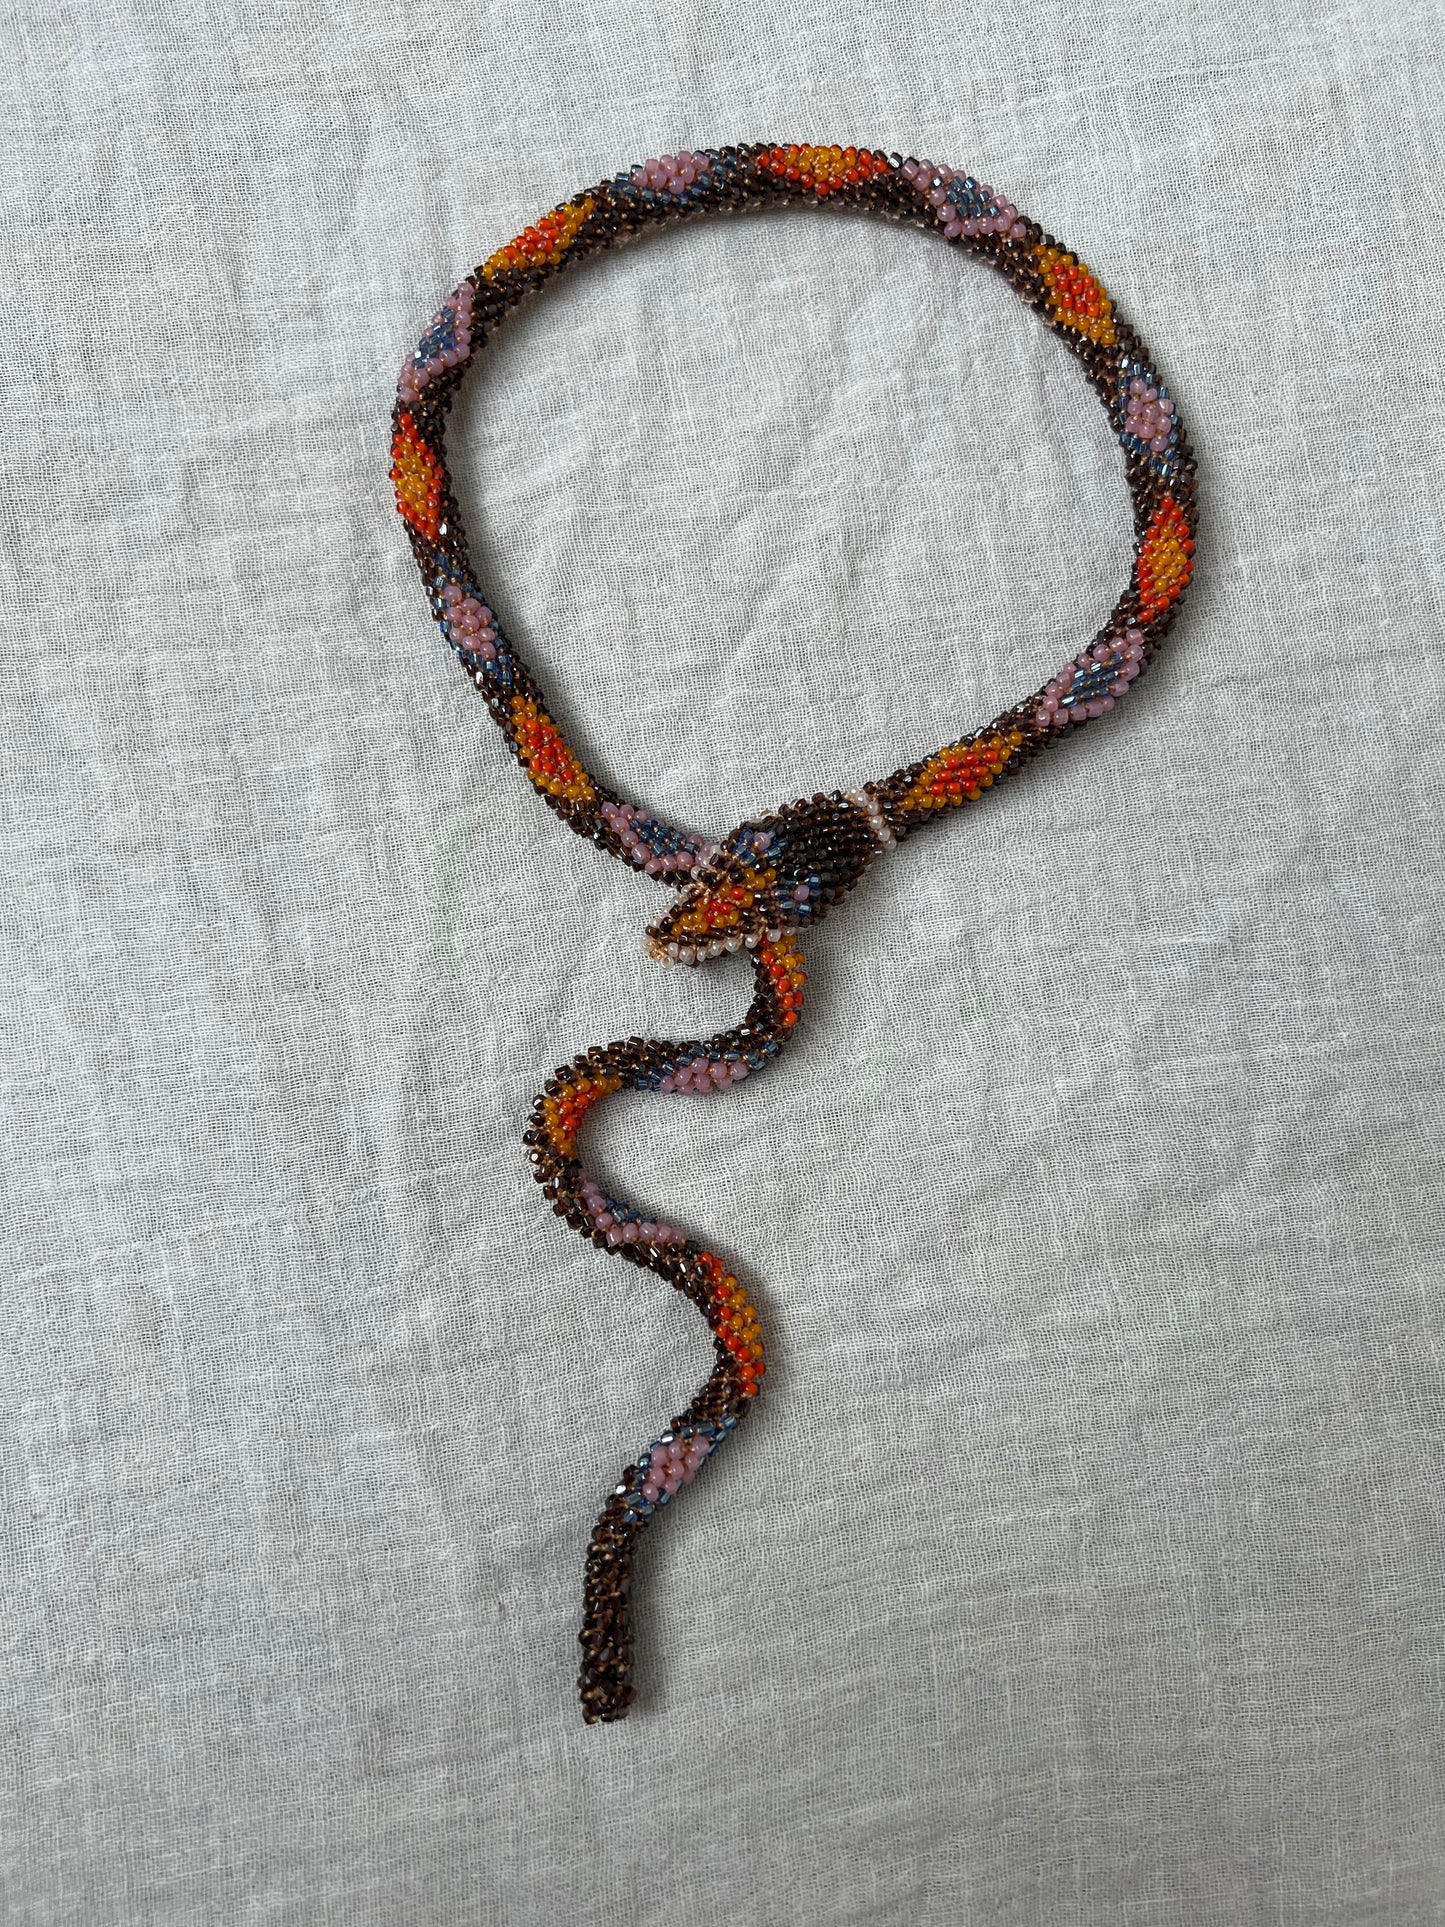 Bead Crochet Snake | Root Beer